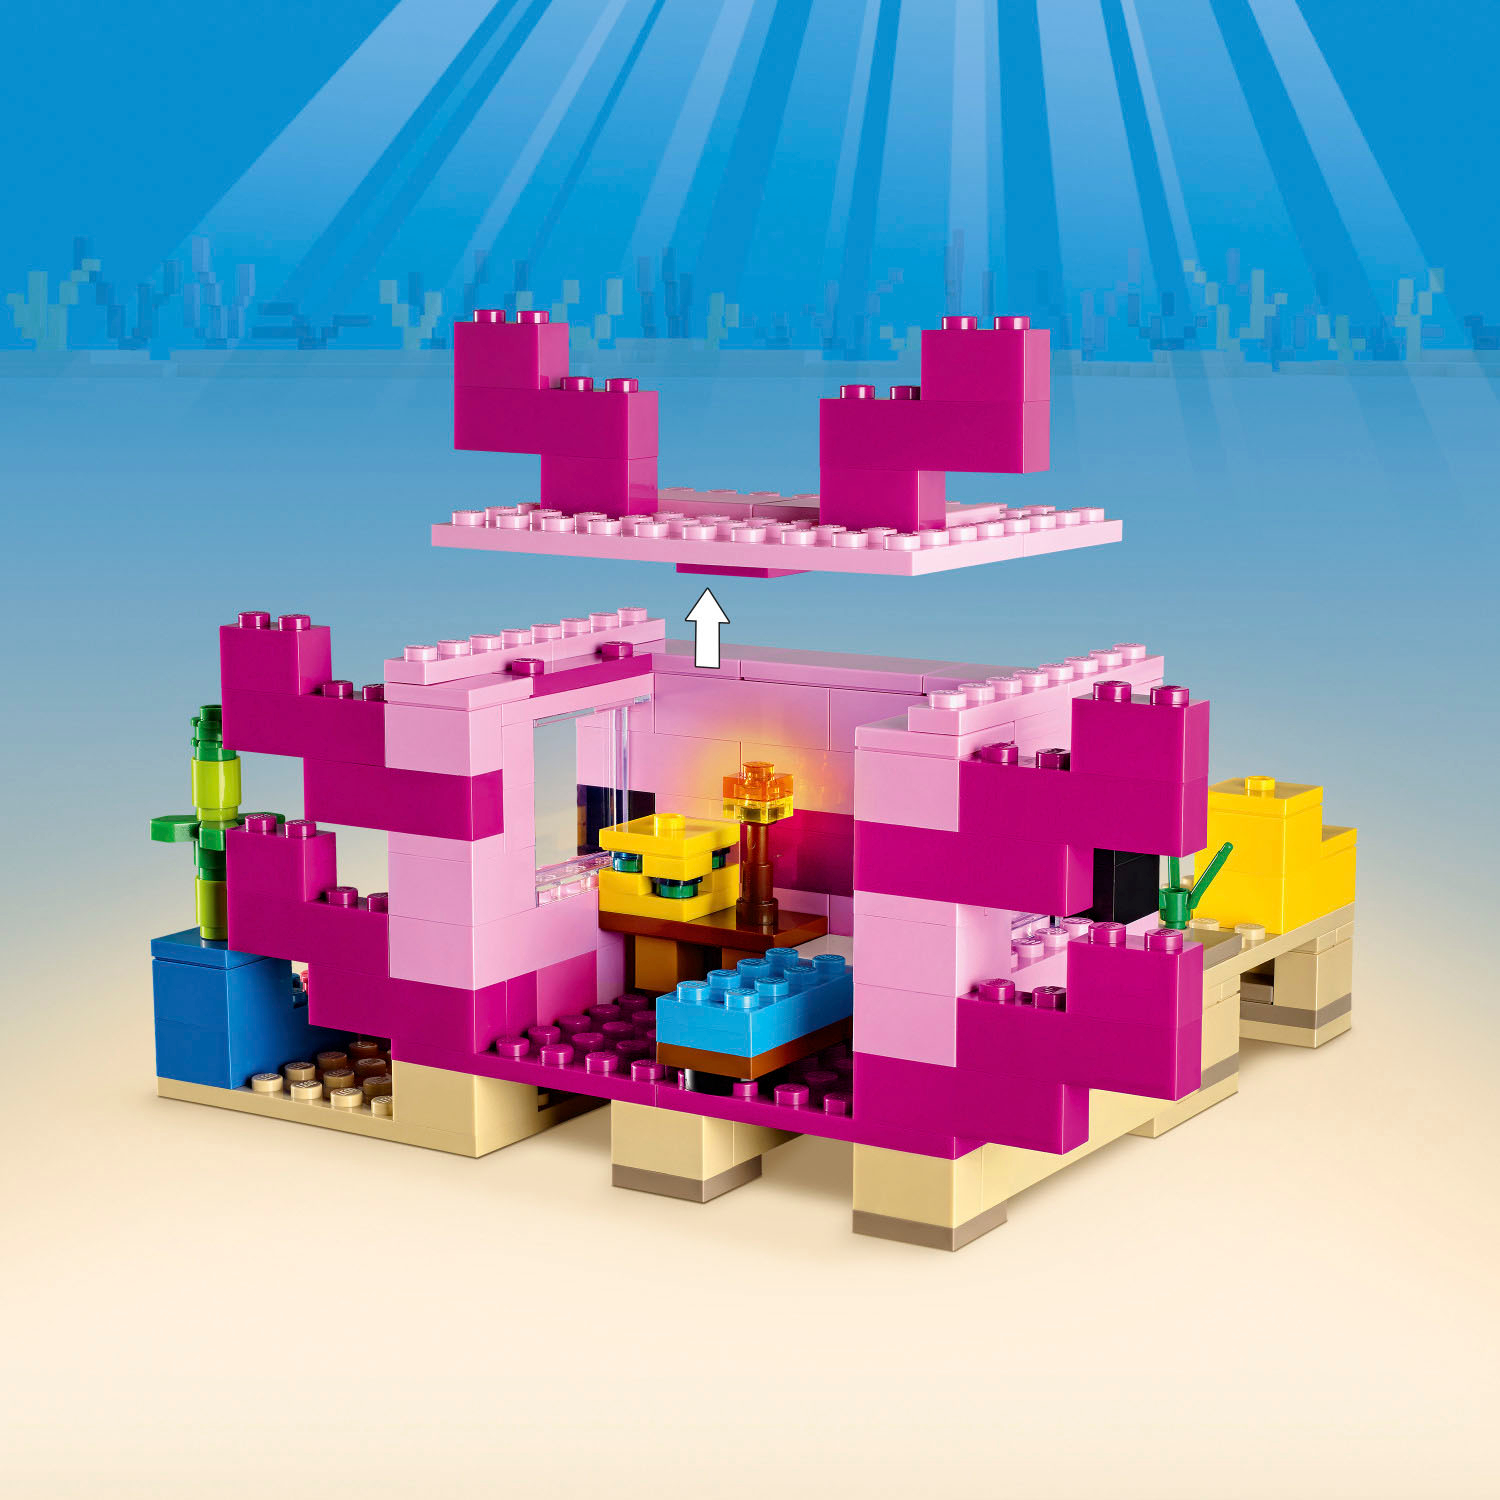 The Axolotl House 21247, Minecraft®